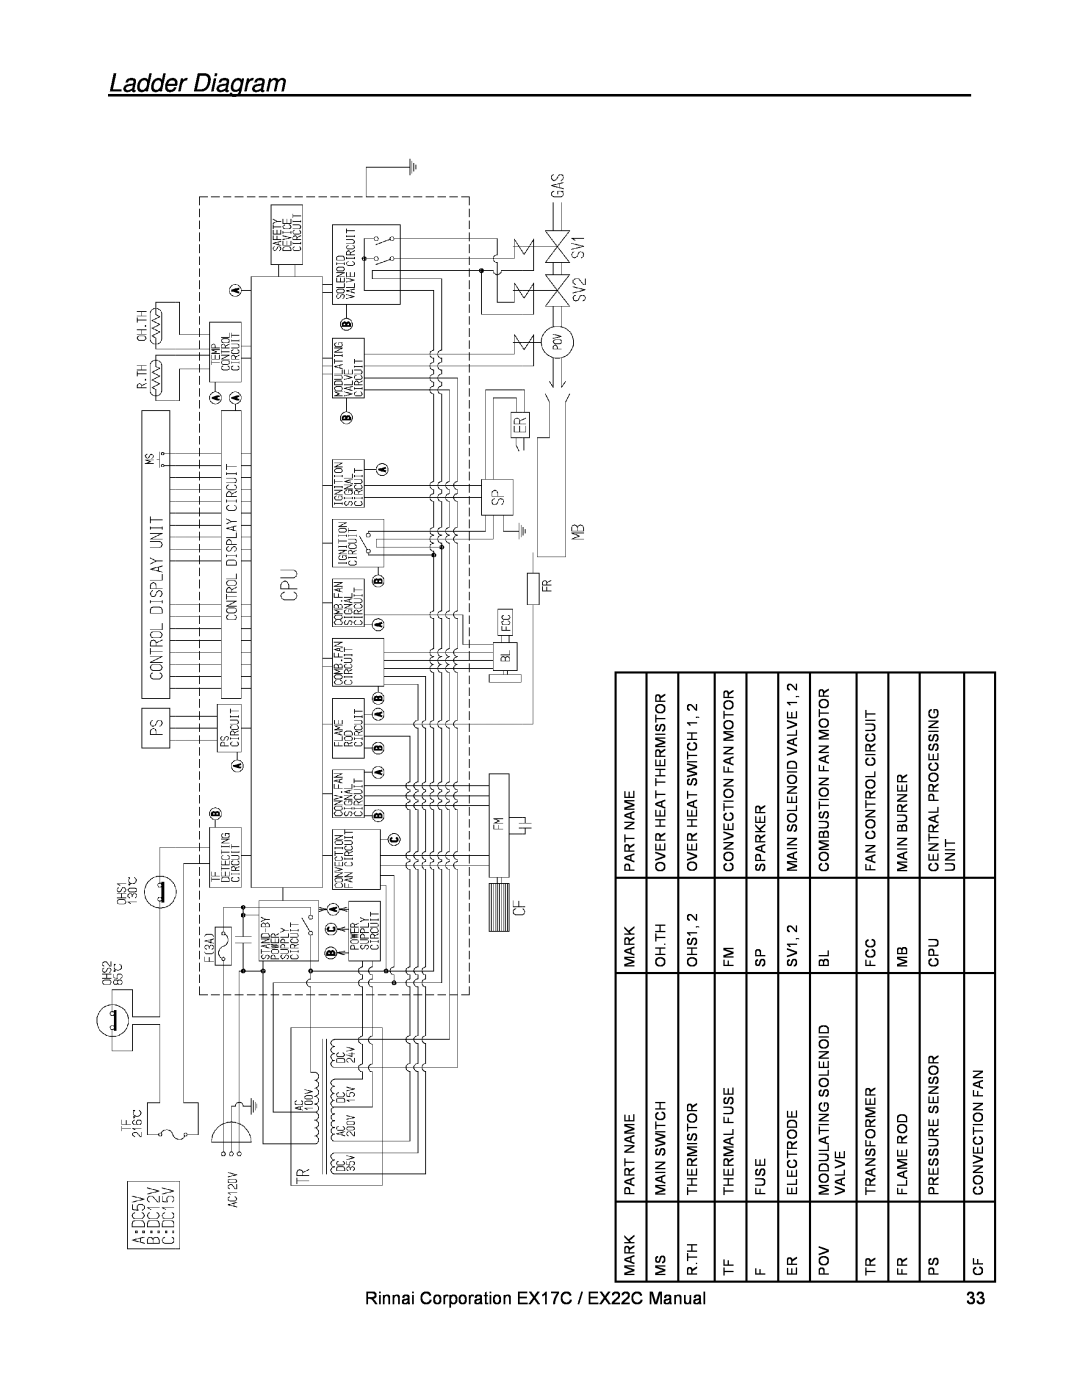 Rinnai EX22C installation manual Ladder Diagram, Rinnai Corporation EX17C 